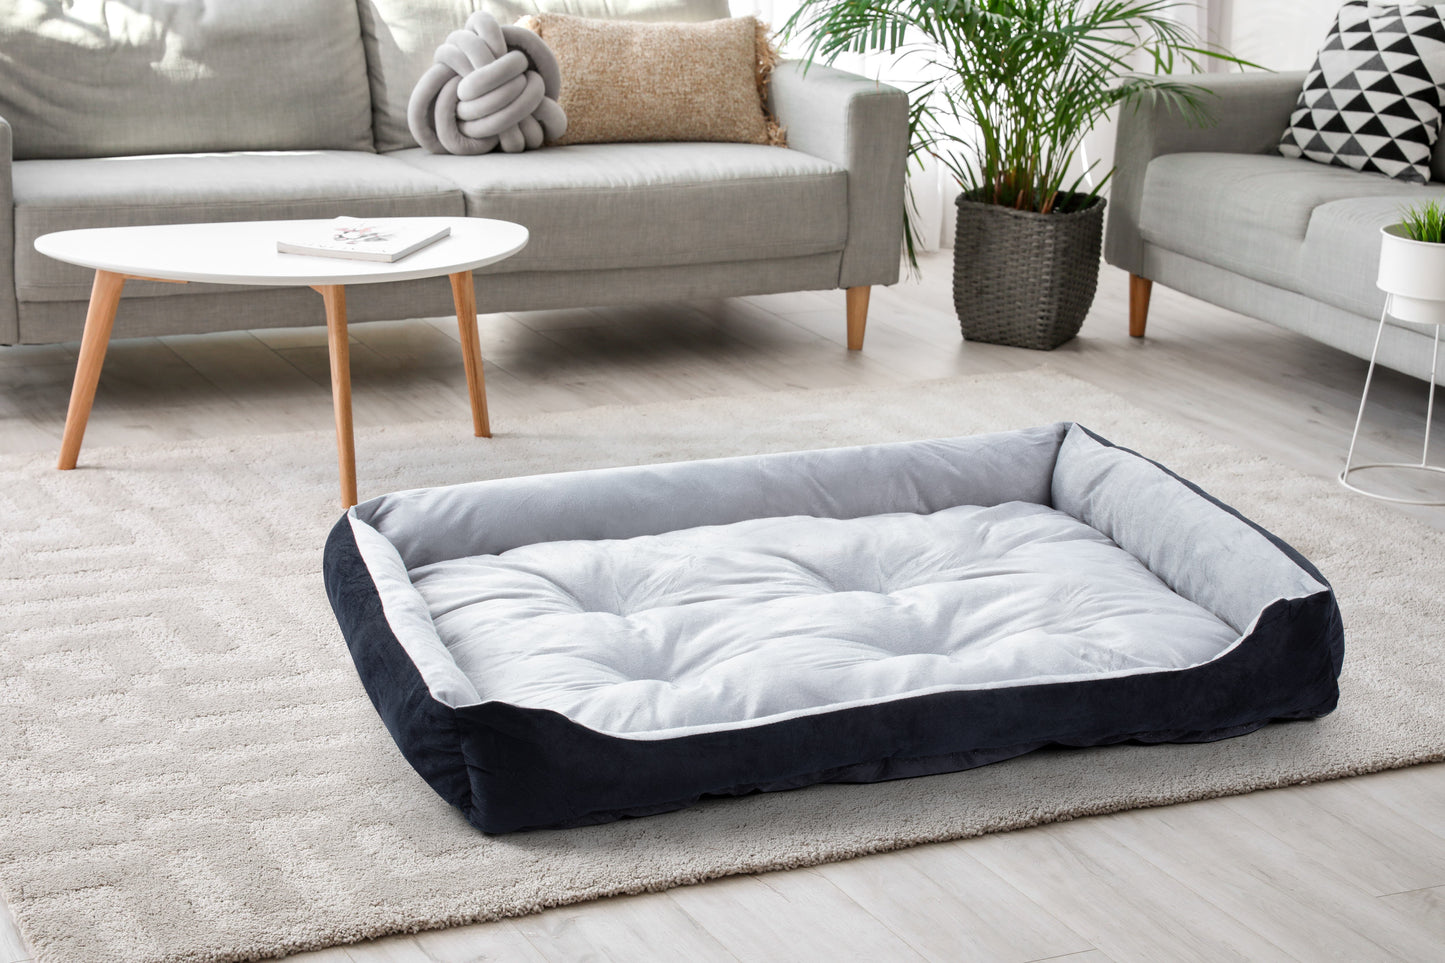 Pawever Pets Dog Bed (XXL, 120cm)